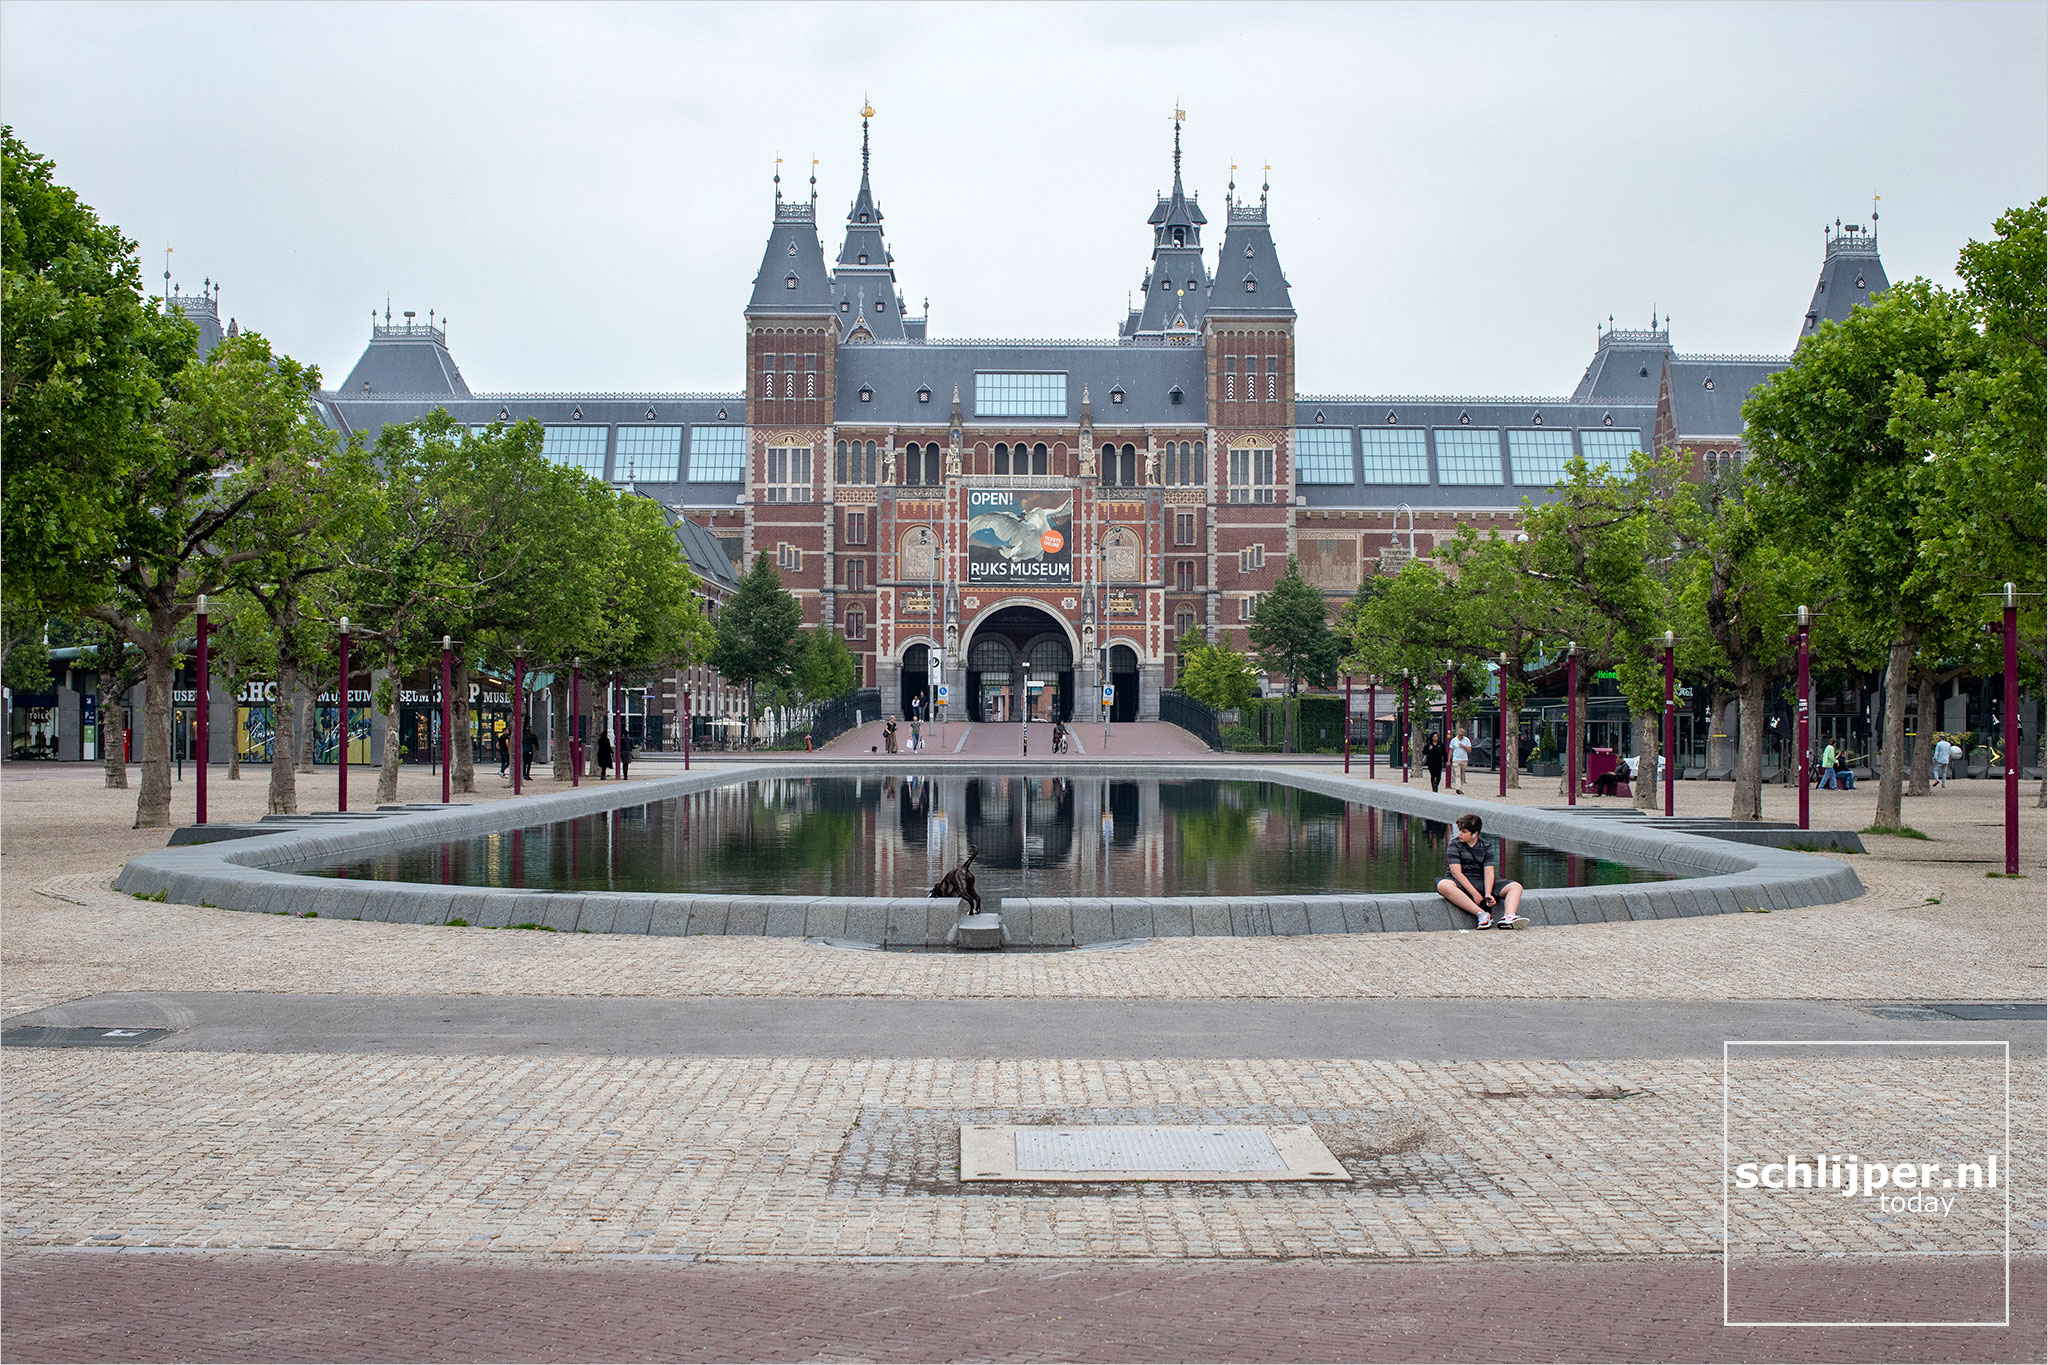 Nederland, Amsterdam, 14 juni 2020